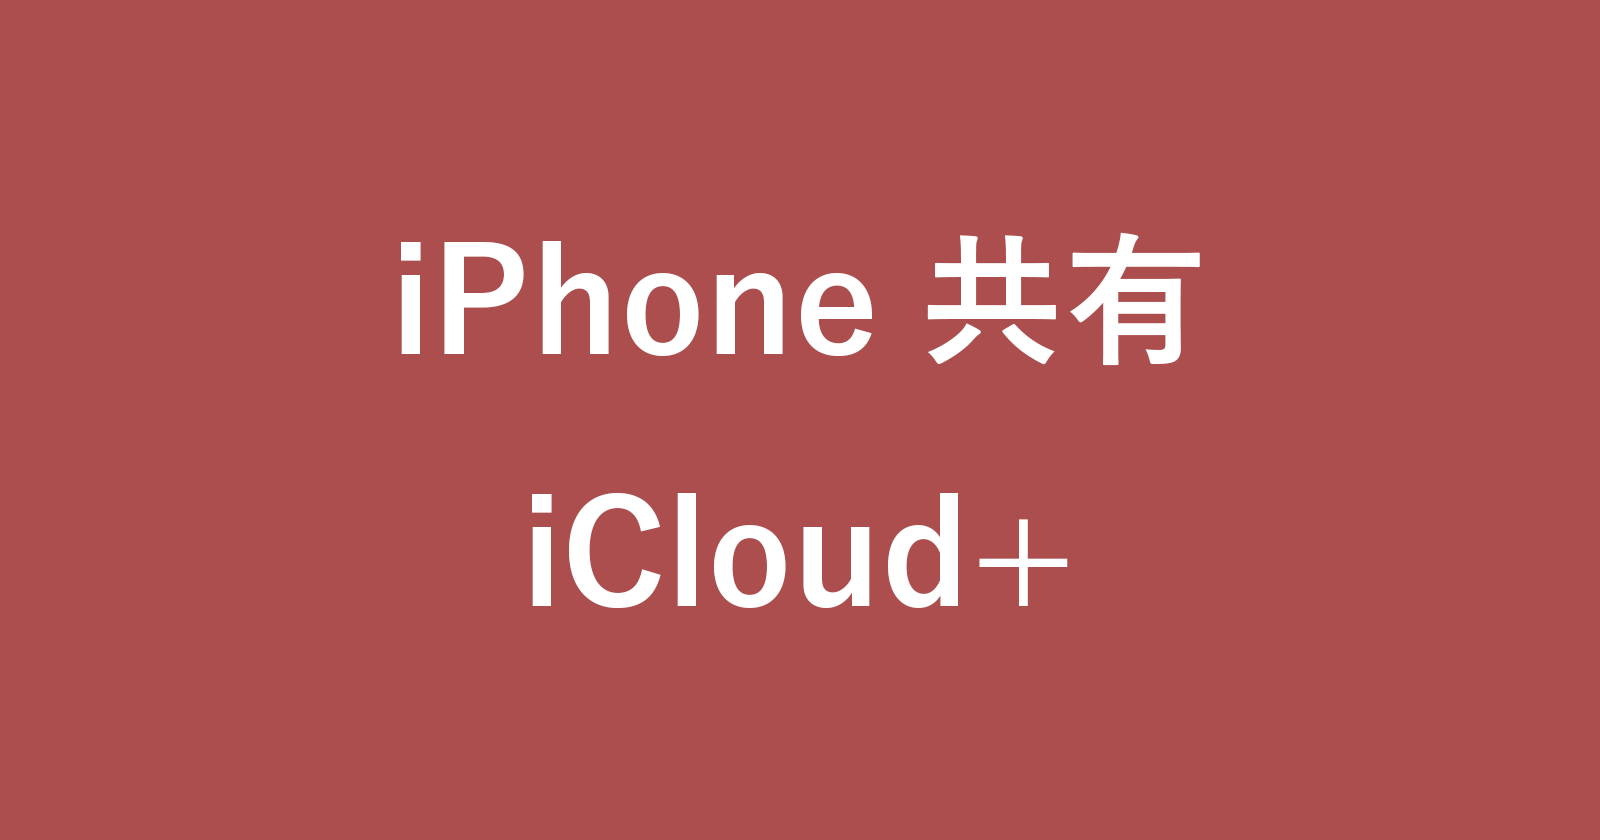 iphone sharing icloud